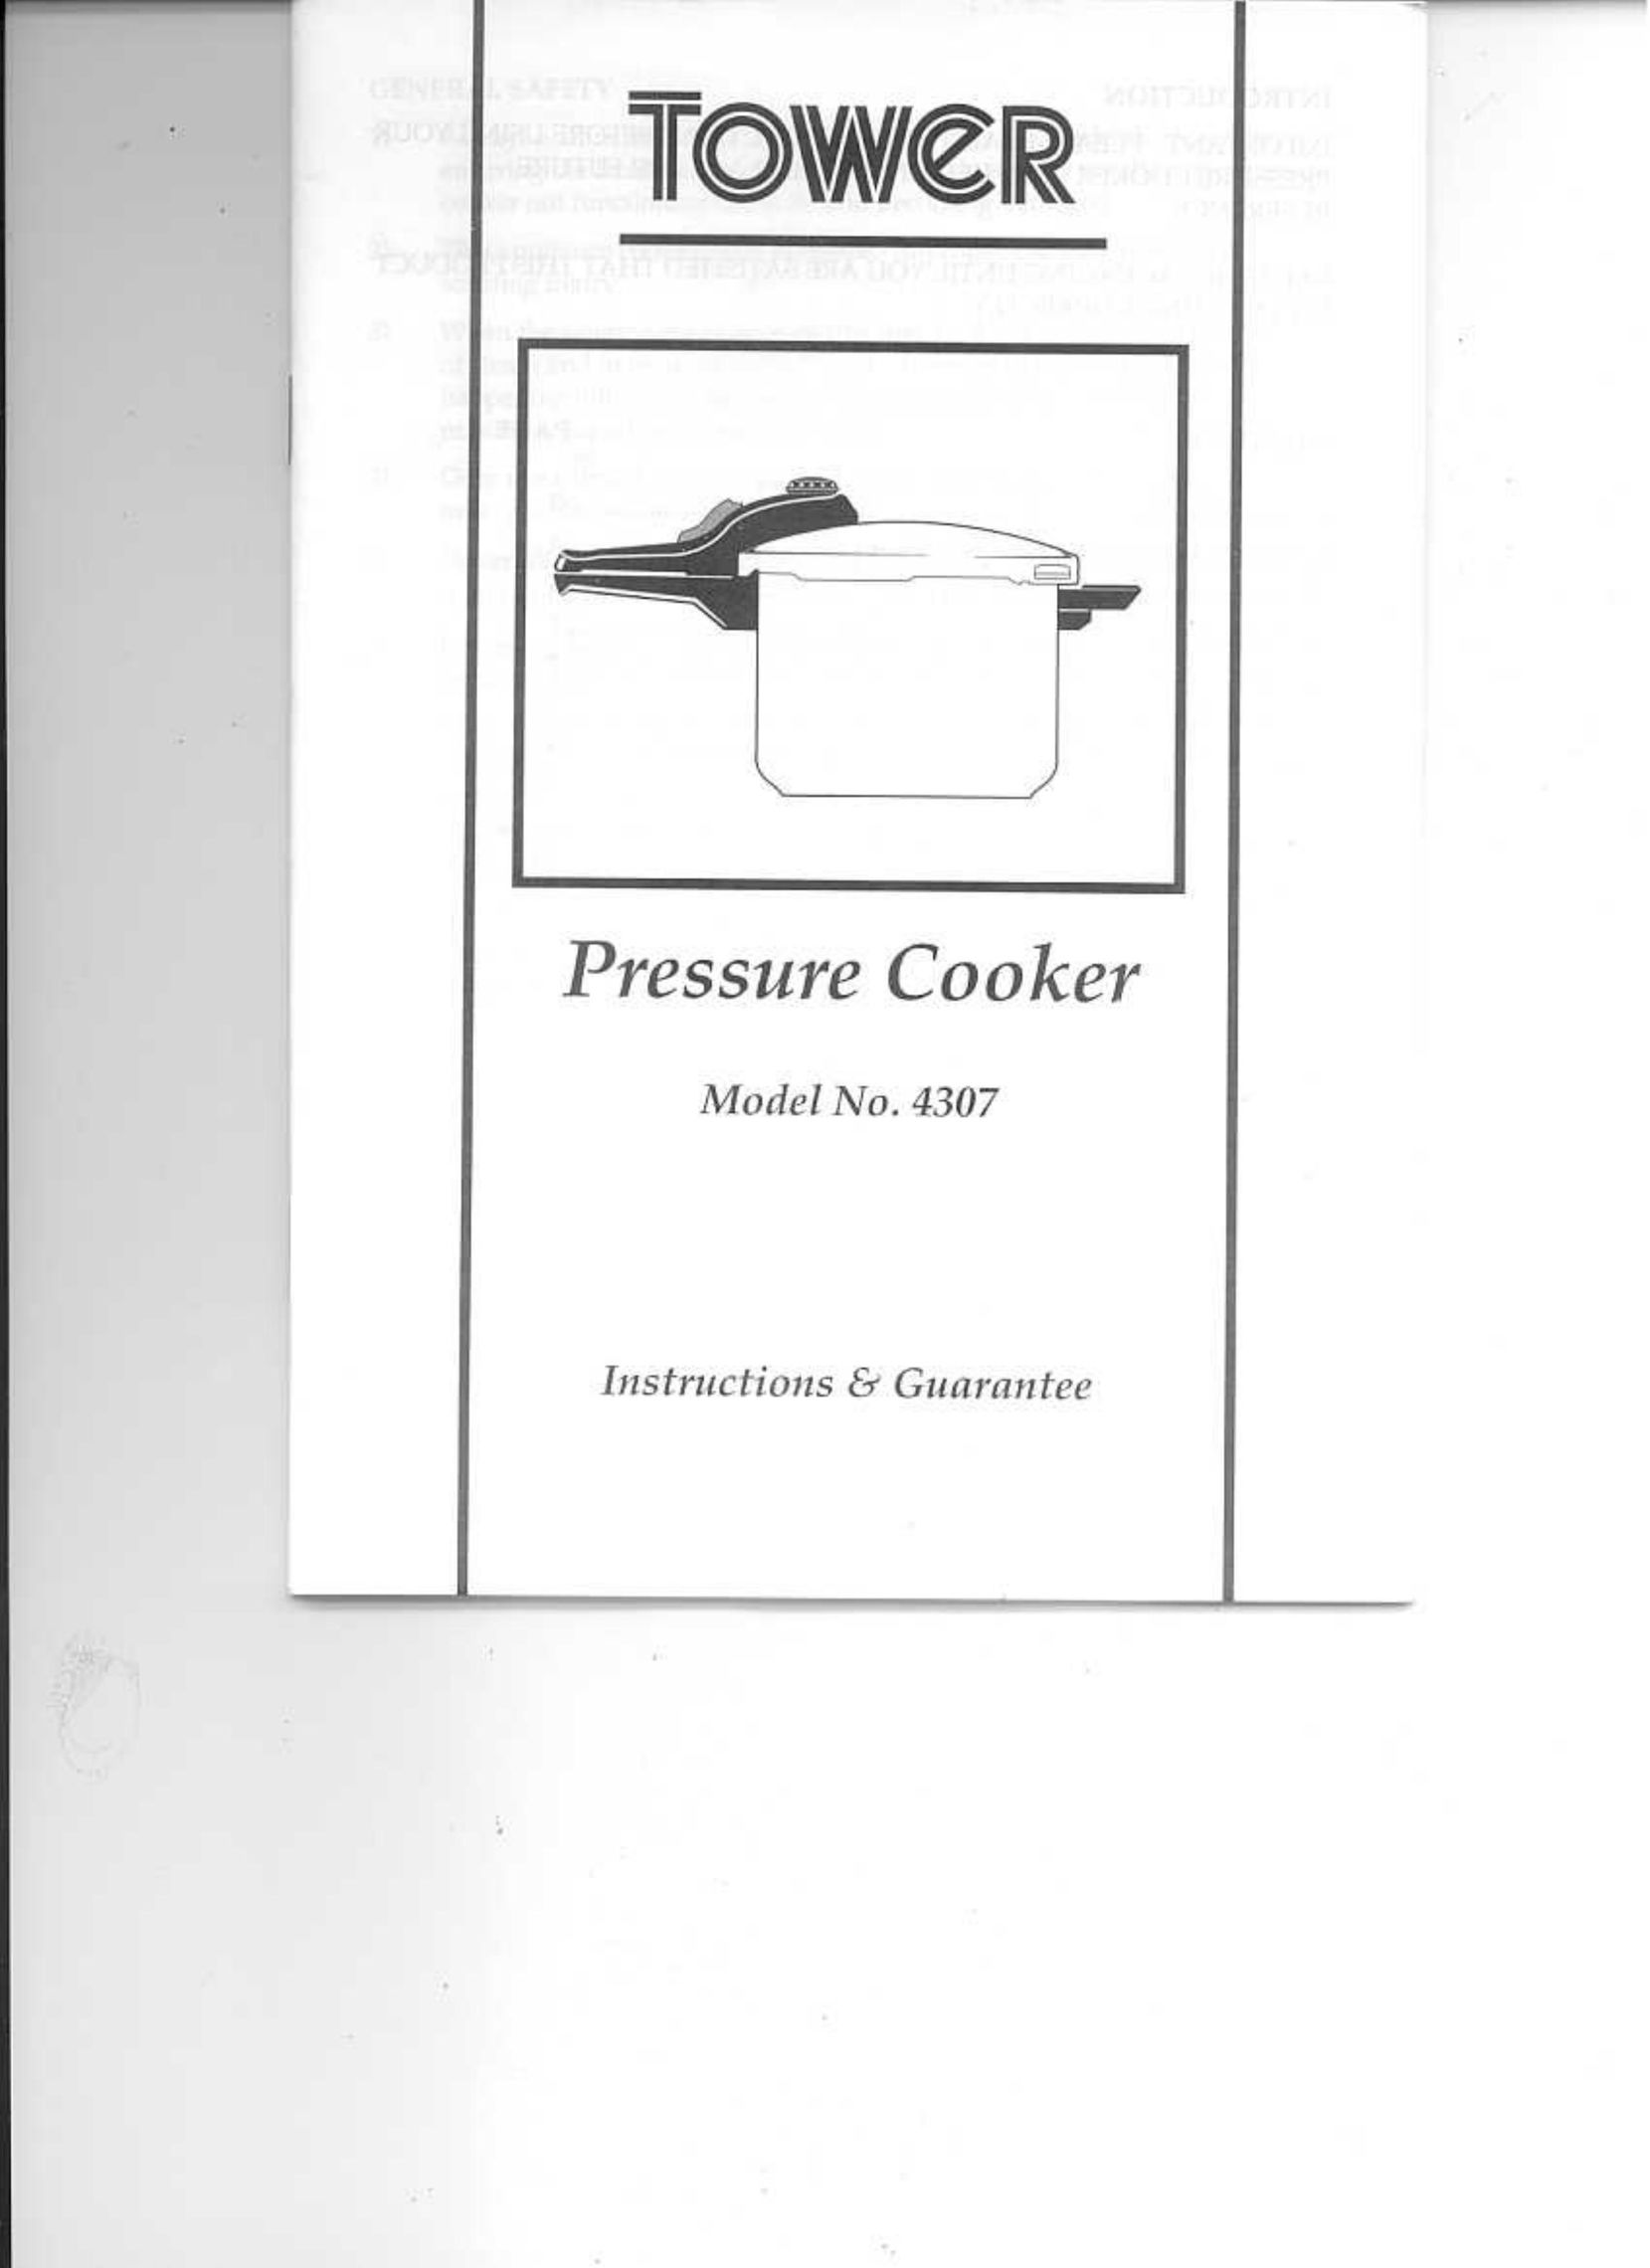 Tower 4307 Electric Pressure Cooker User Manual